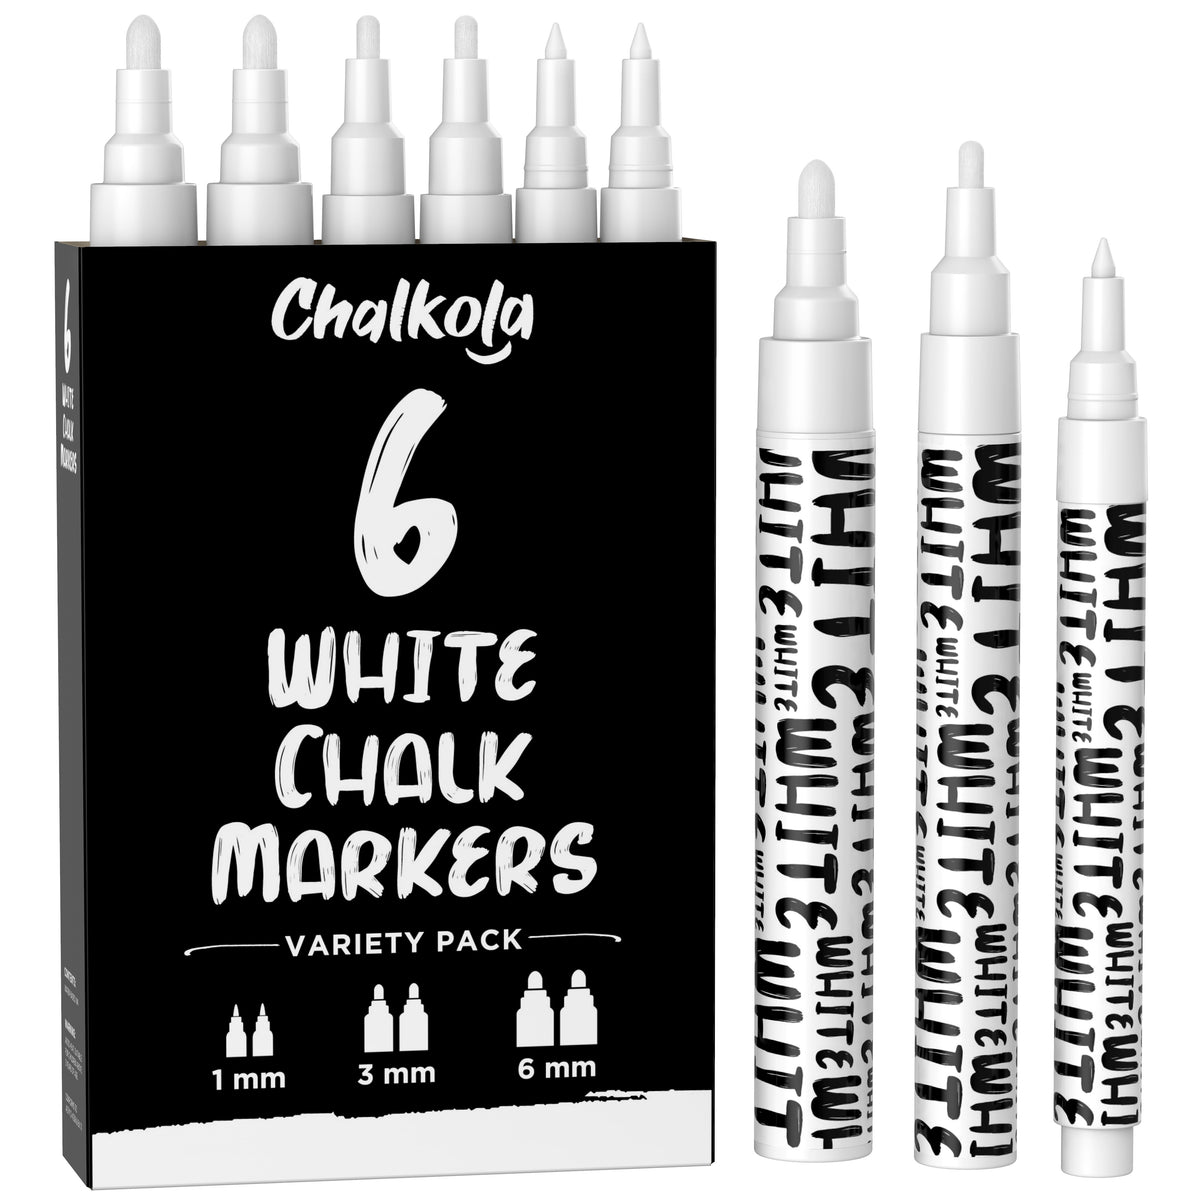  EUBUY Liquid Chalk Markers, Set of 8PCS 6mm Dry & Wet